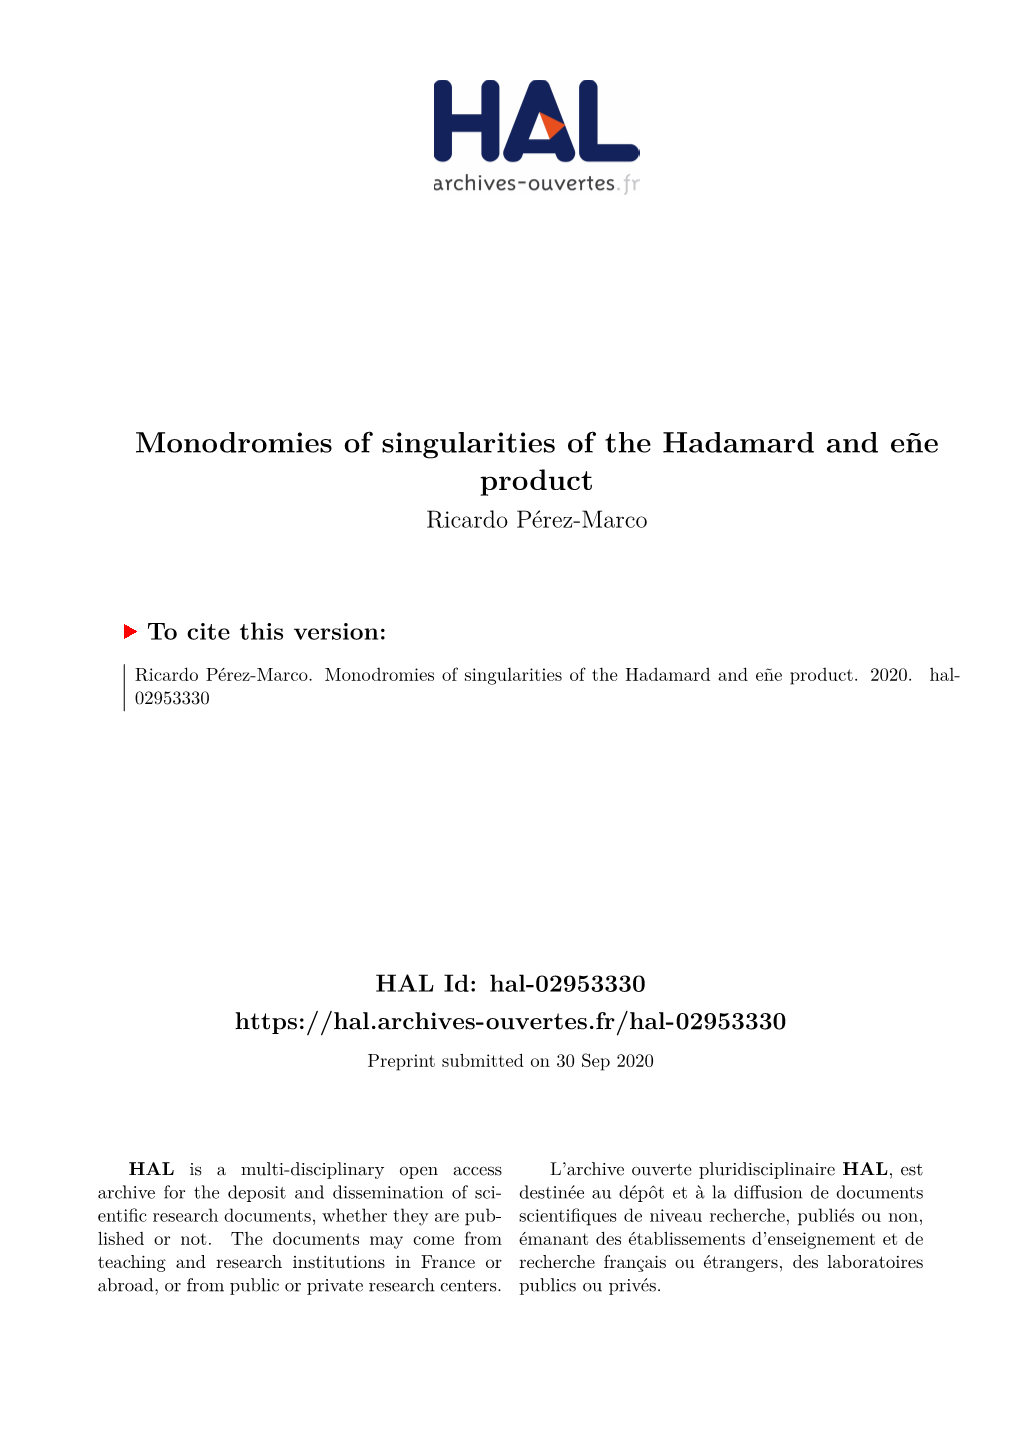 Monodromies of Singularities of the Hadamard and Eñe Product Ricardo Pérez-Marco